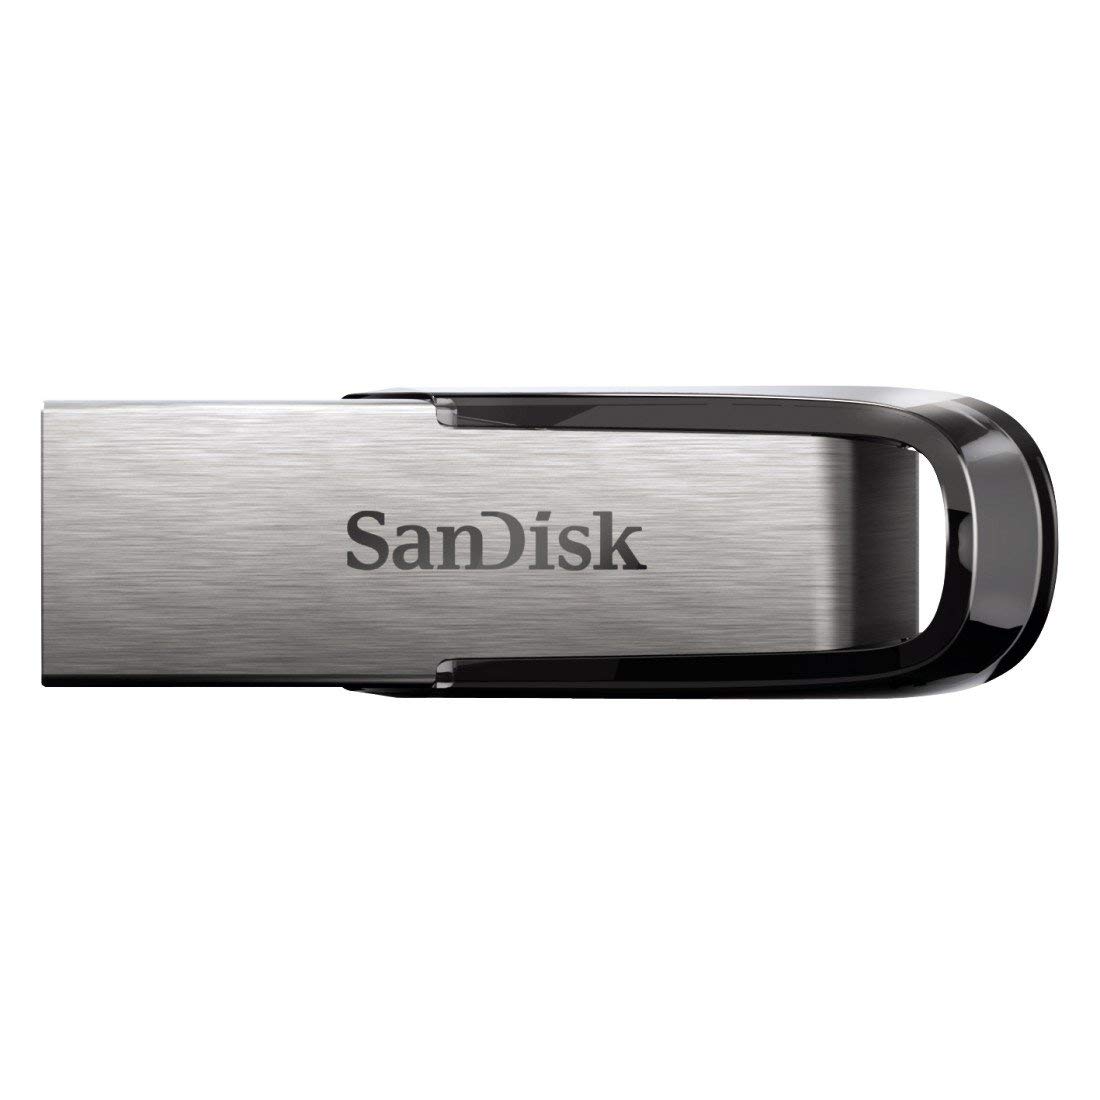 Memoria Flash USB 64 GB SanDisk solo 8,9€